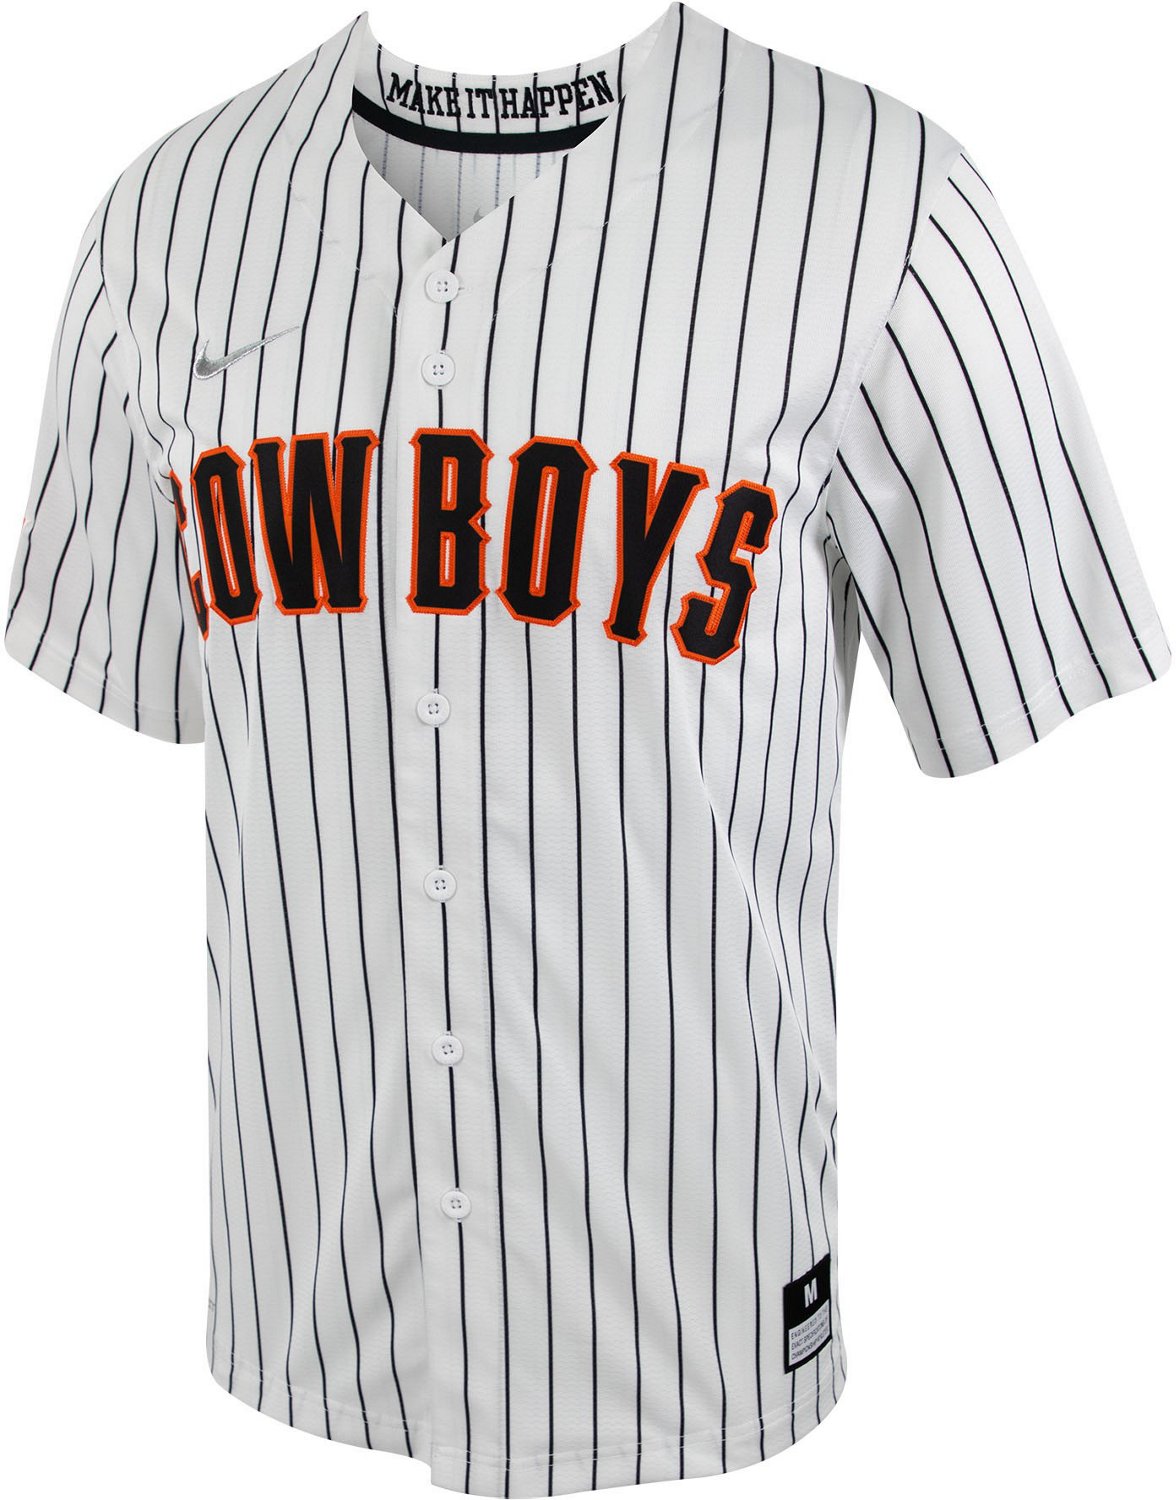 Nike Men's Oklahoma State University Pinstripe Full Button Replica Baseball Jersey Medium / White